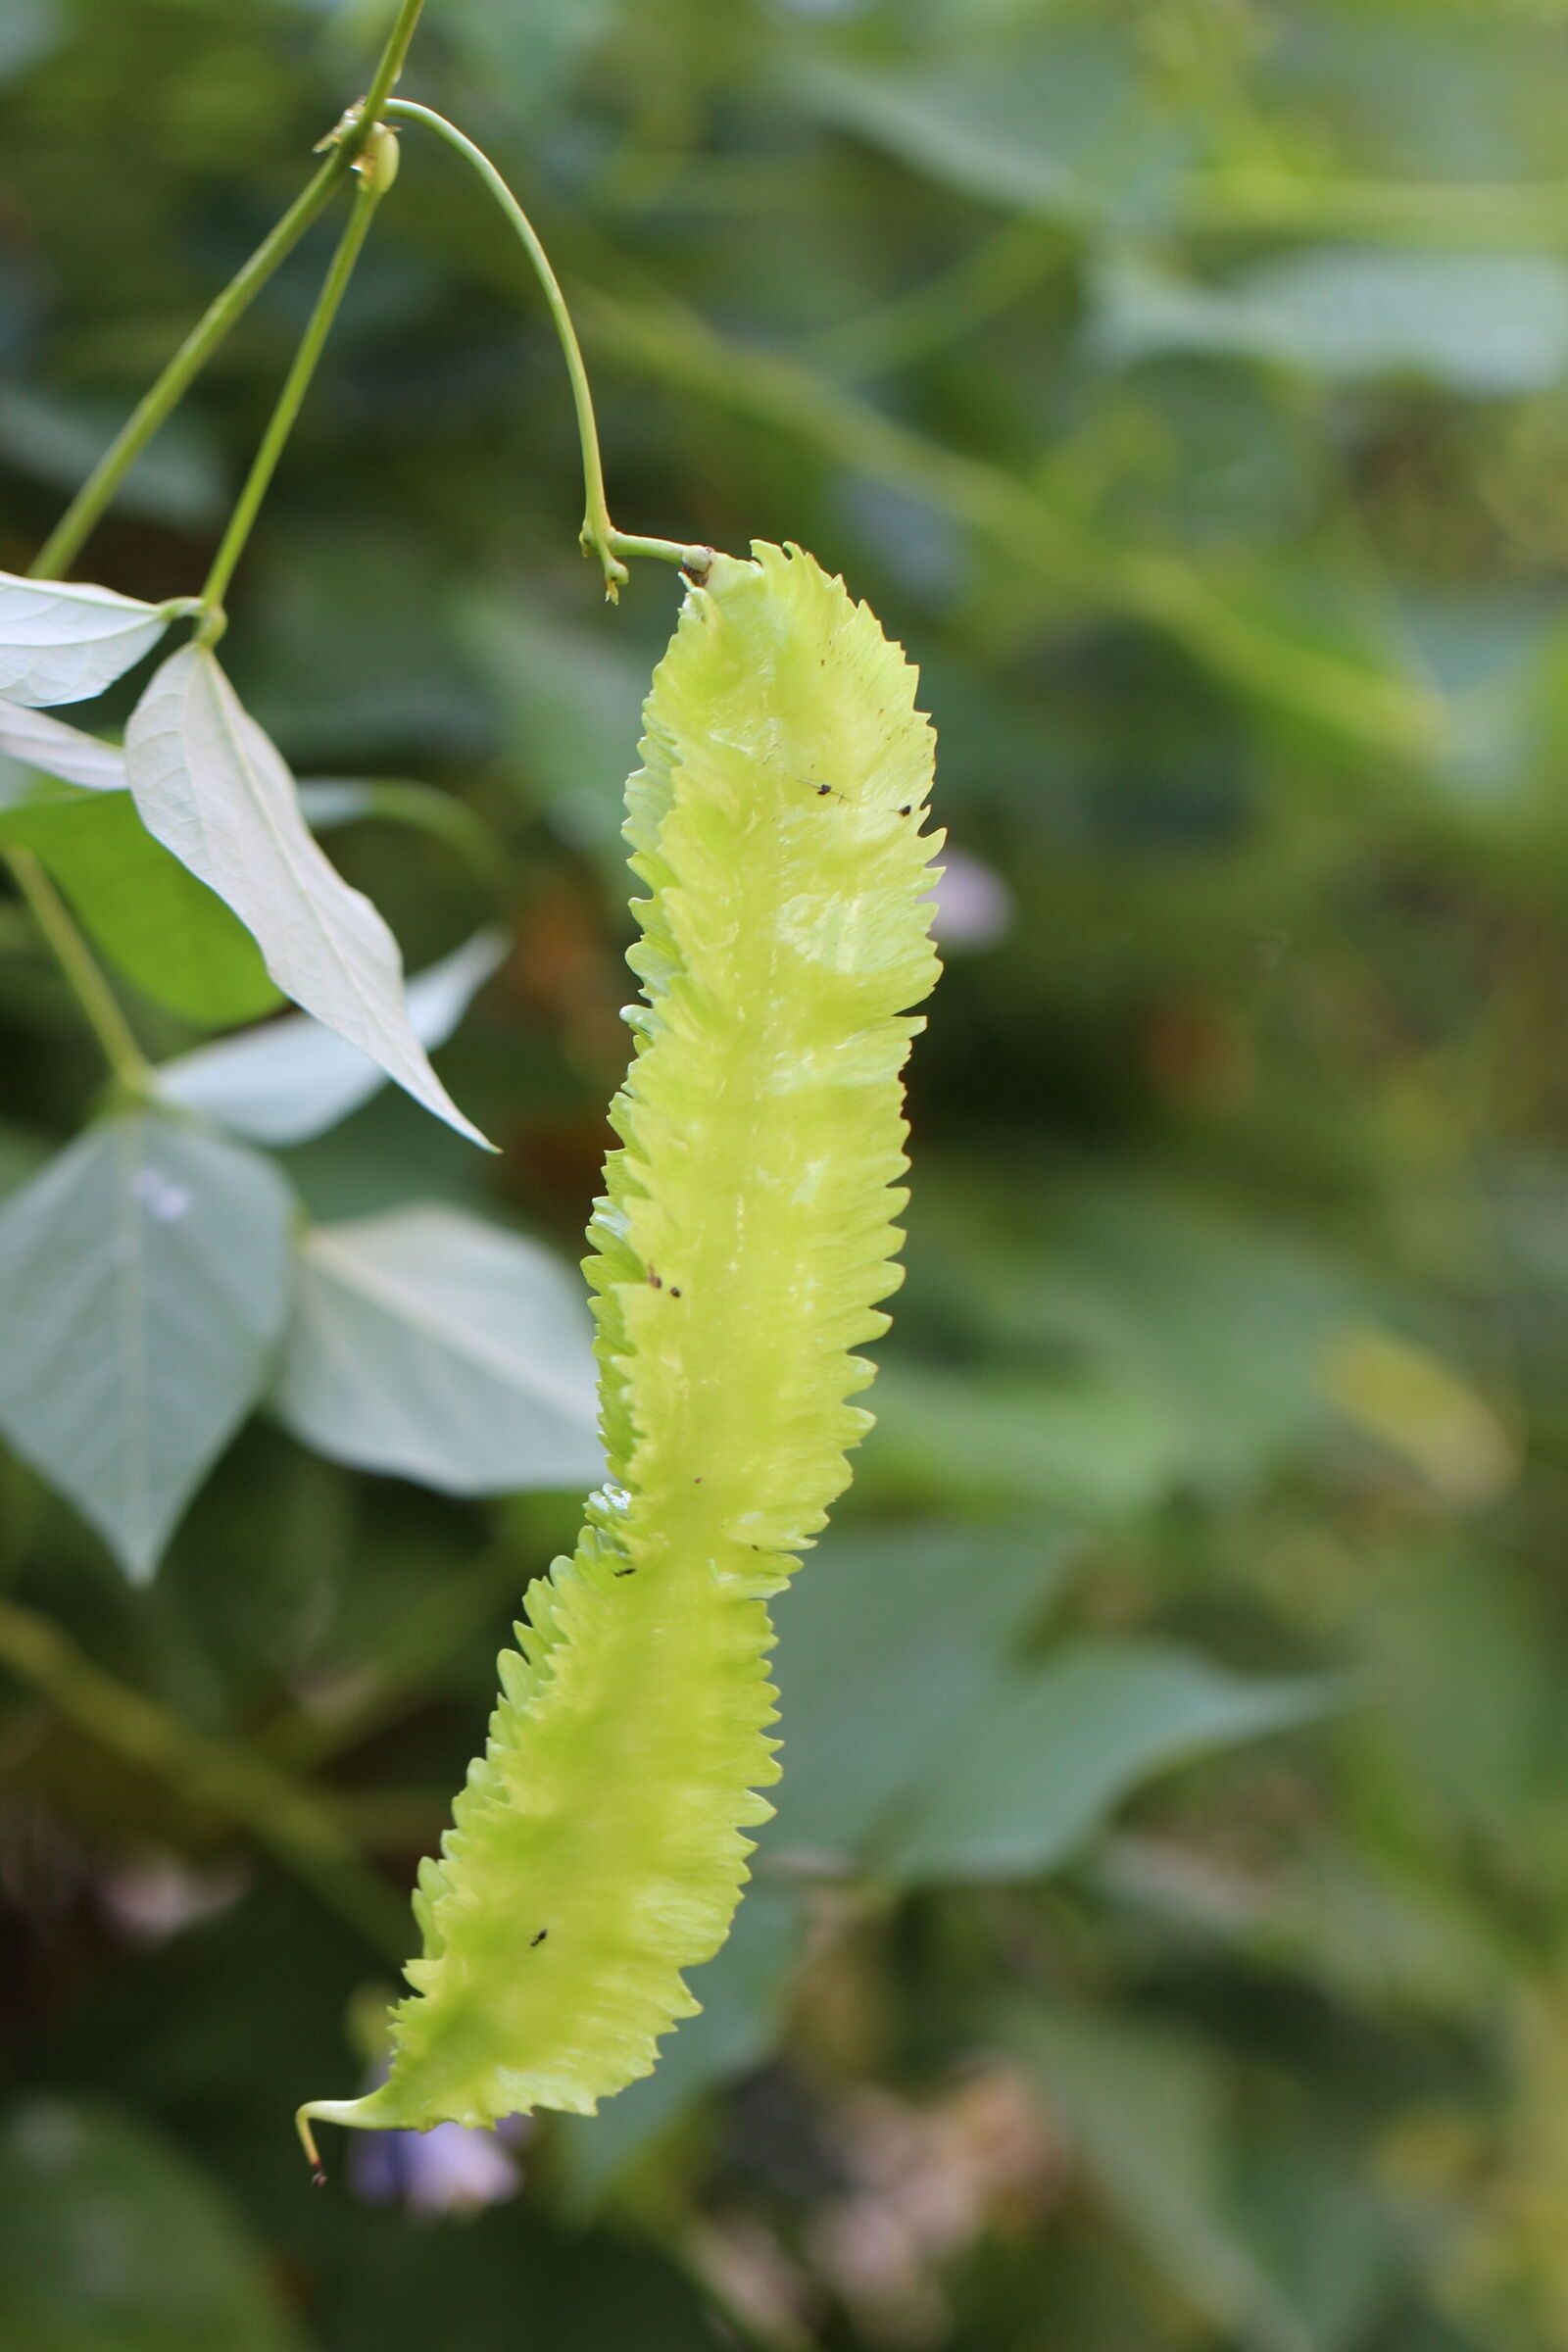 Winged bean (Psophocarpus tetragonolobus). Image by Pradeep Rajatewa